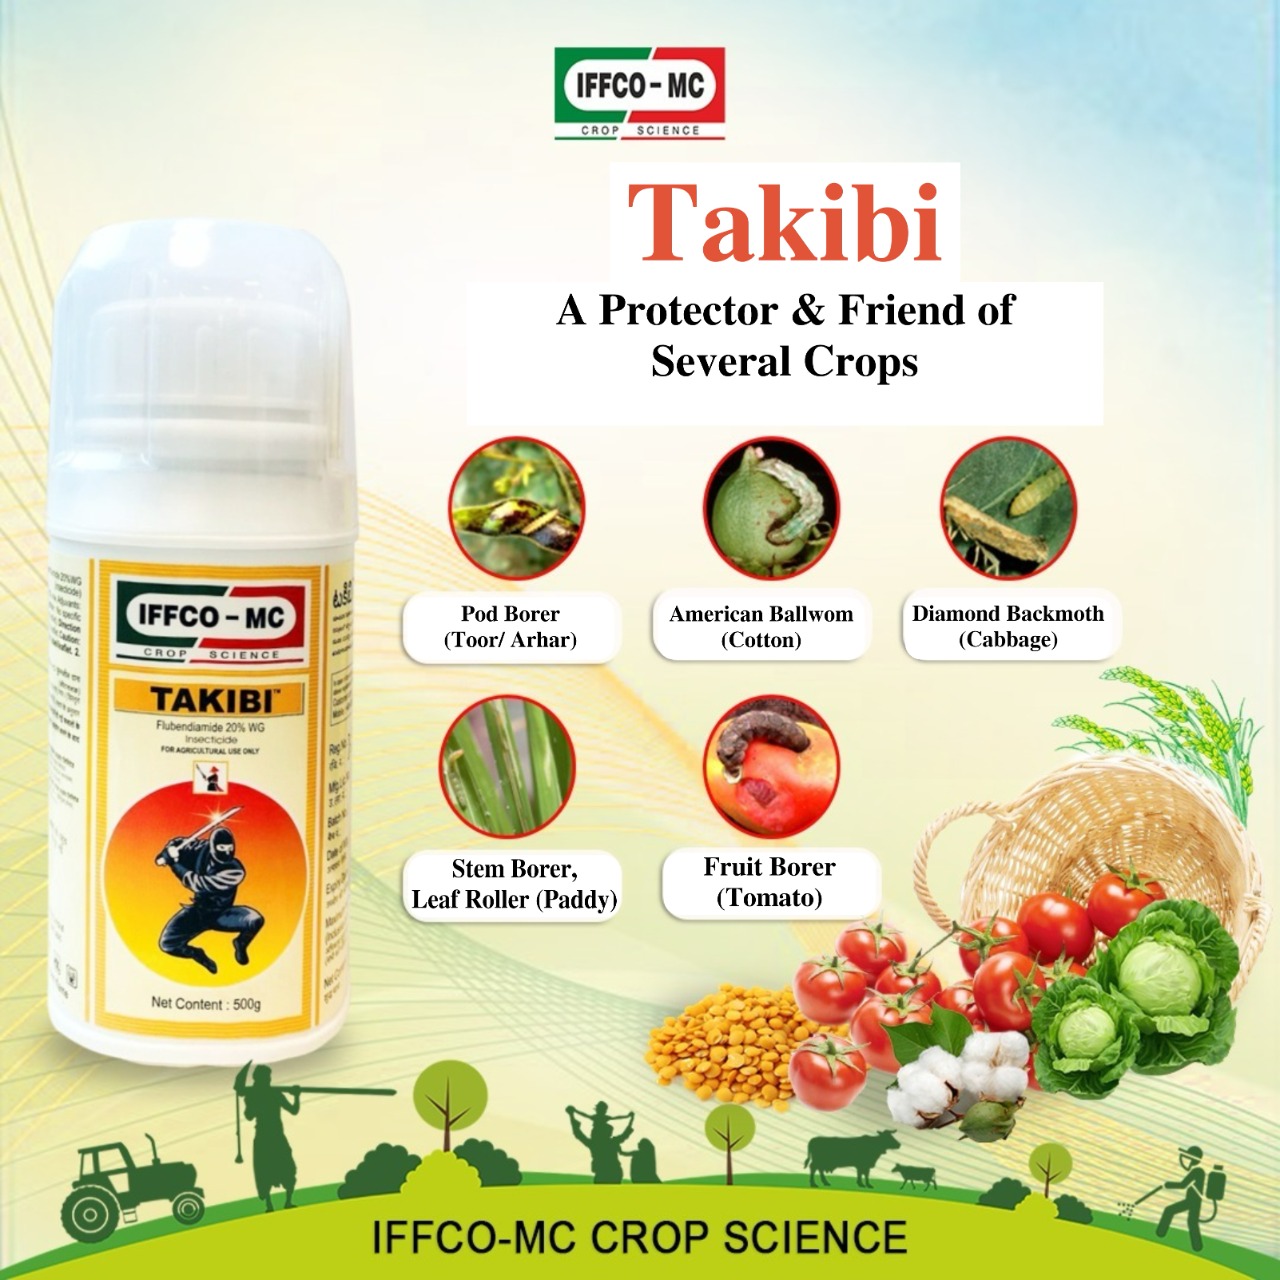 IFFCO-MC’s Takibi– good Insecticide for Farmers